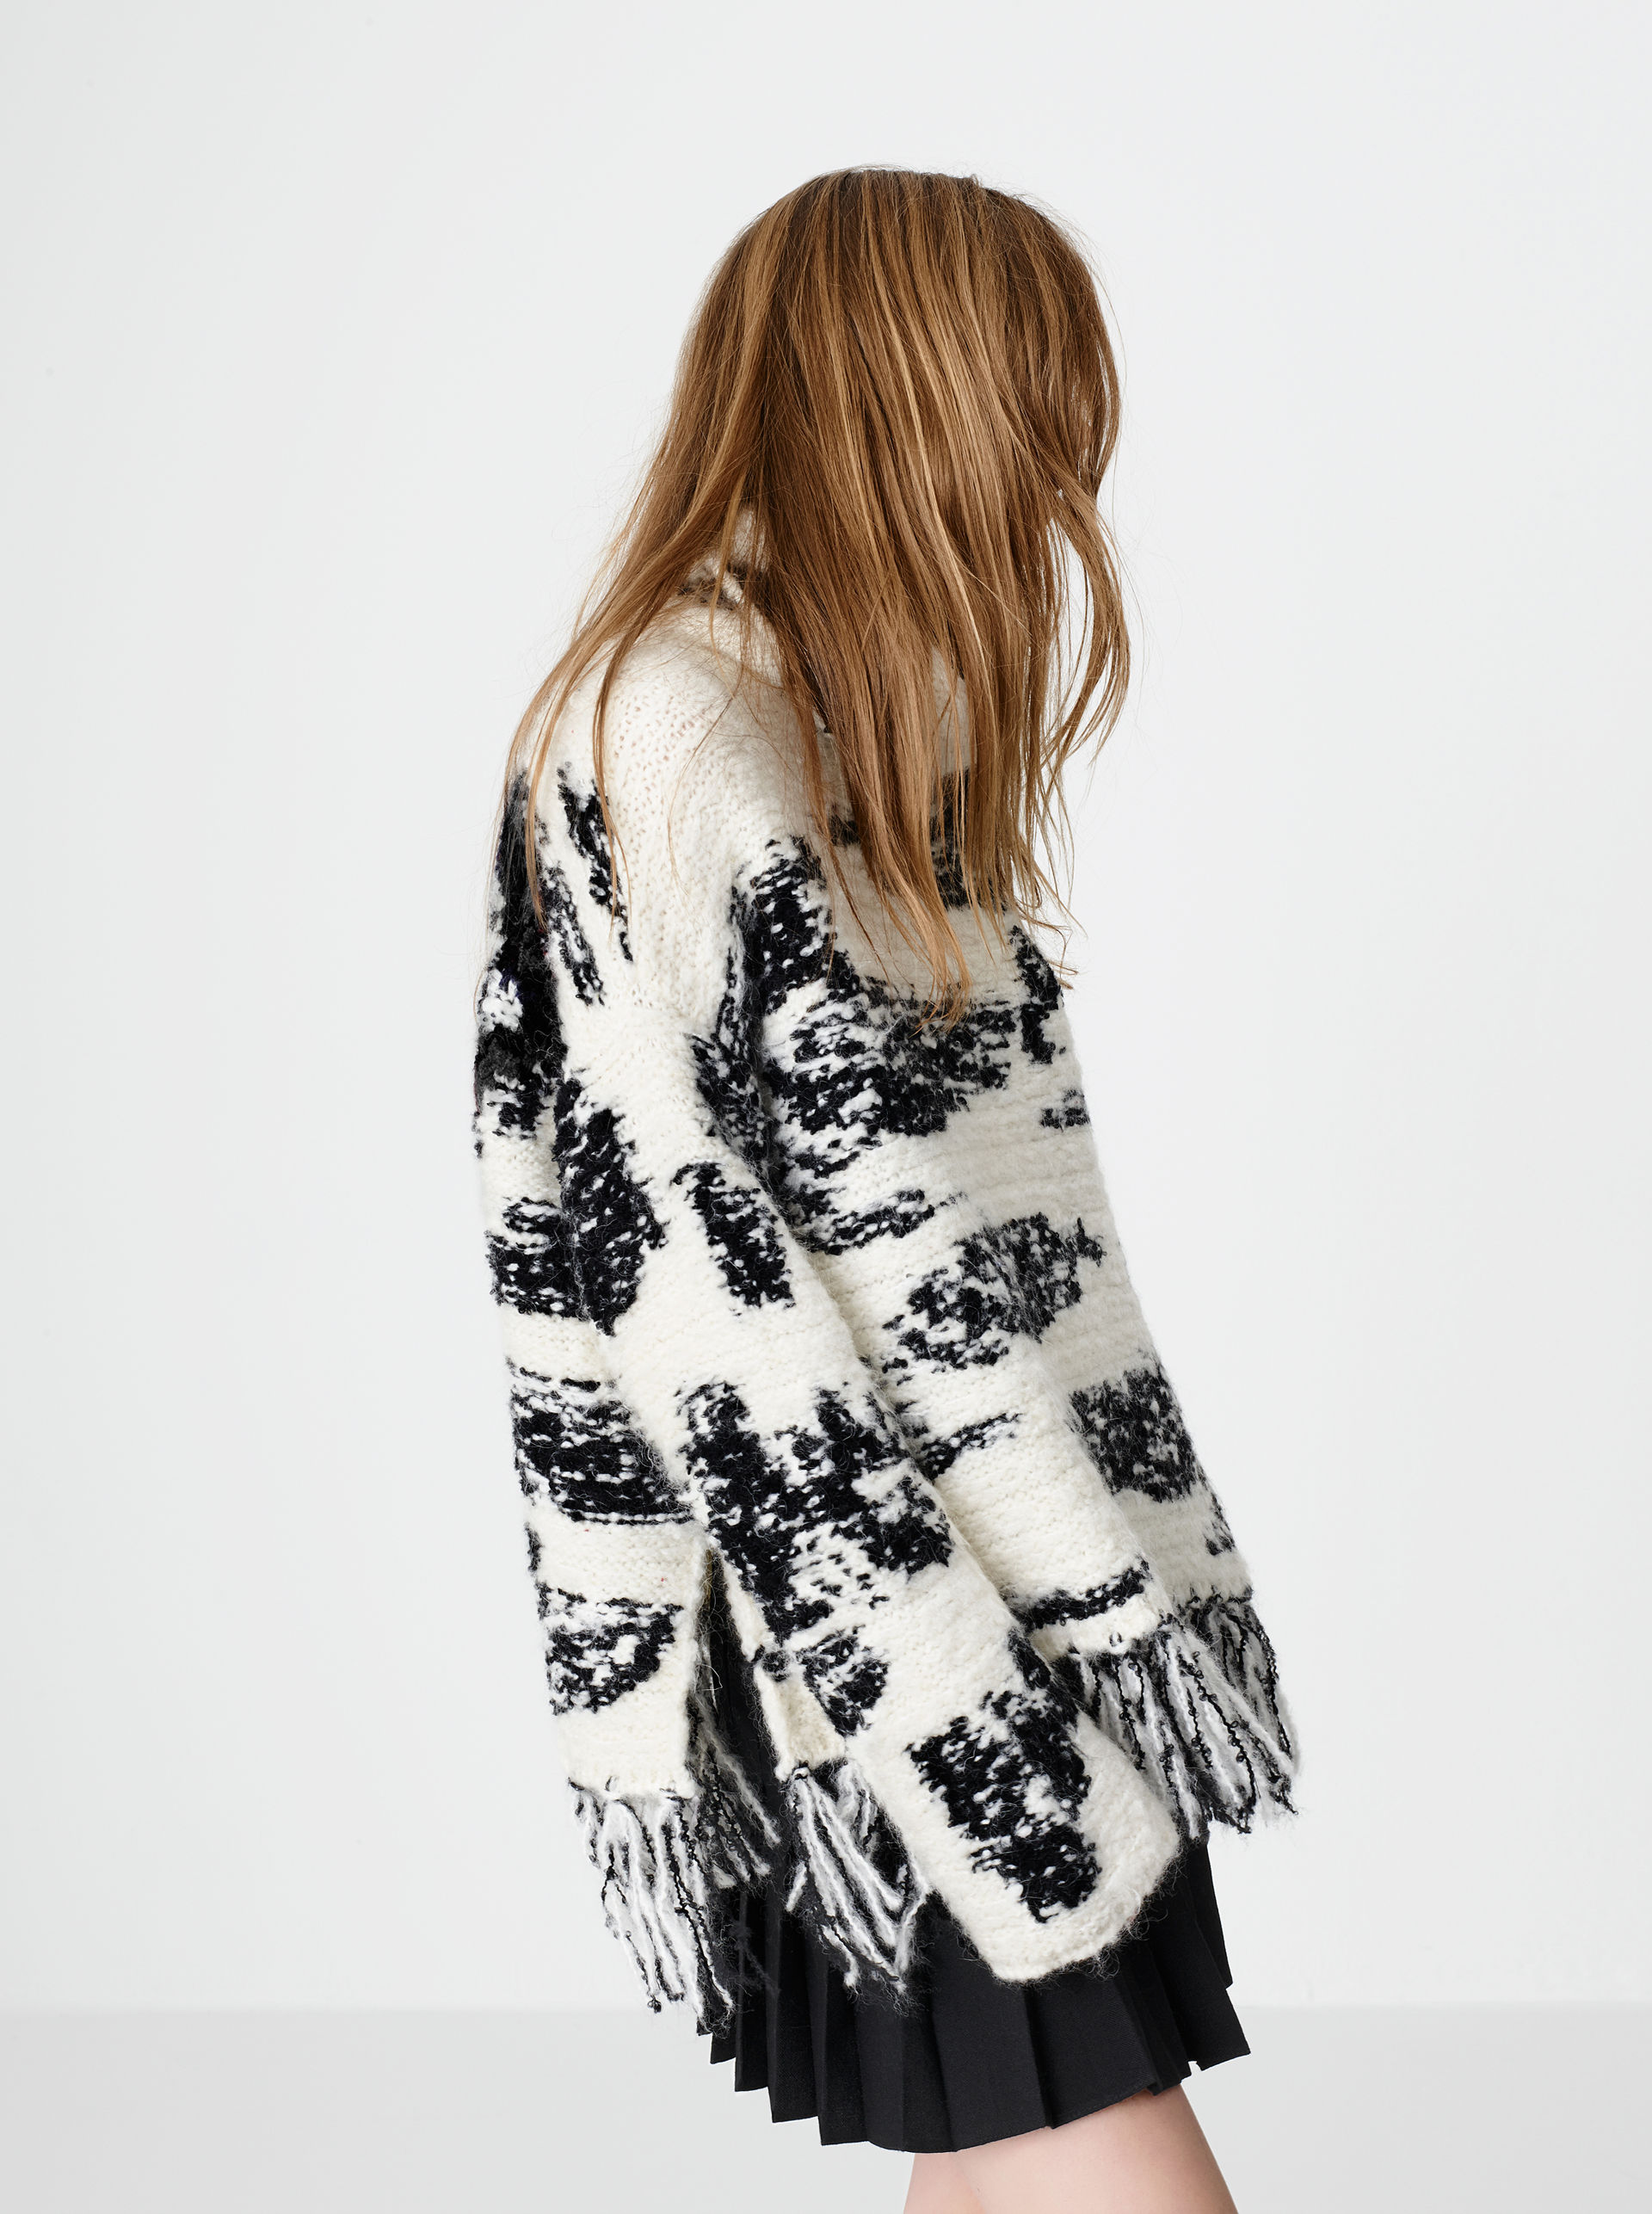 Zara Fall Winter 2014 2015 Essentials